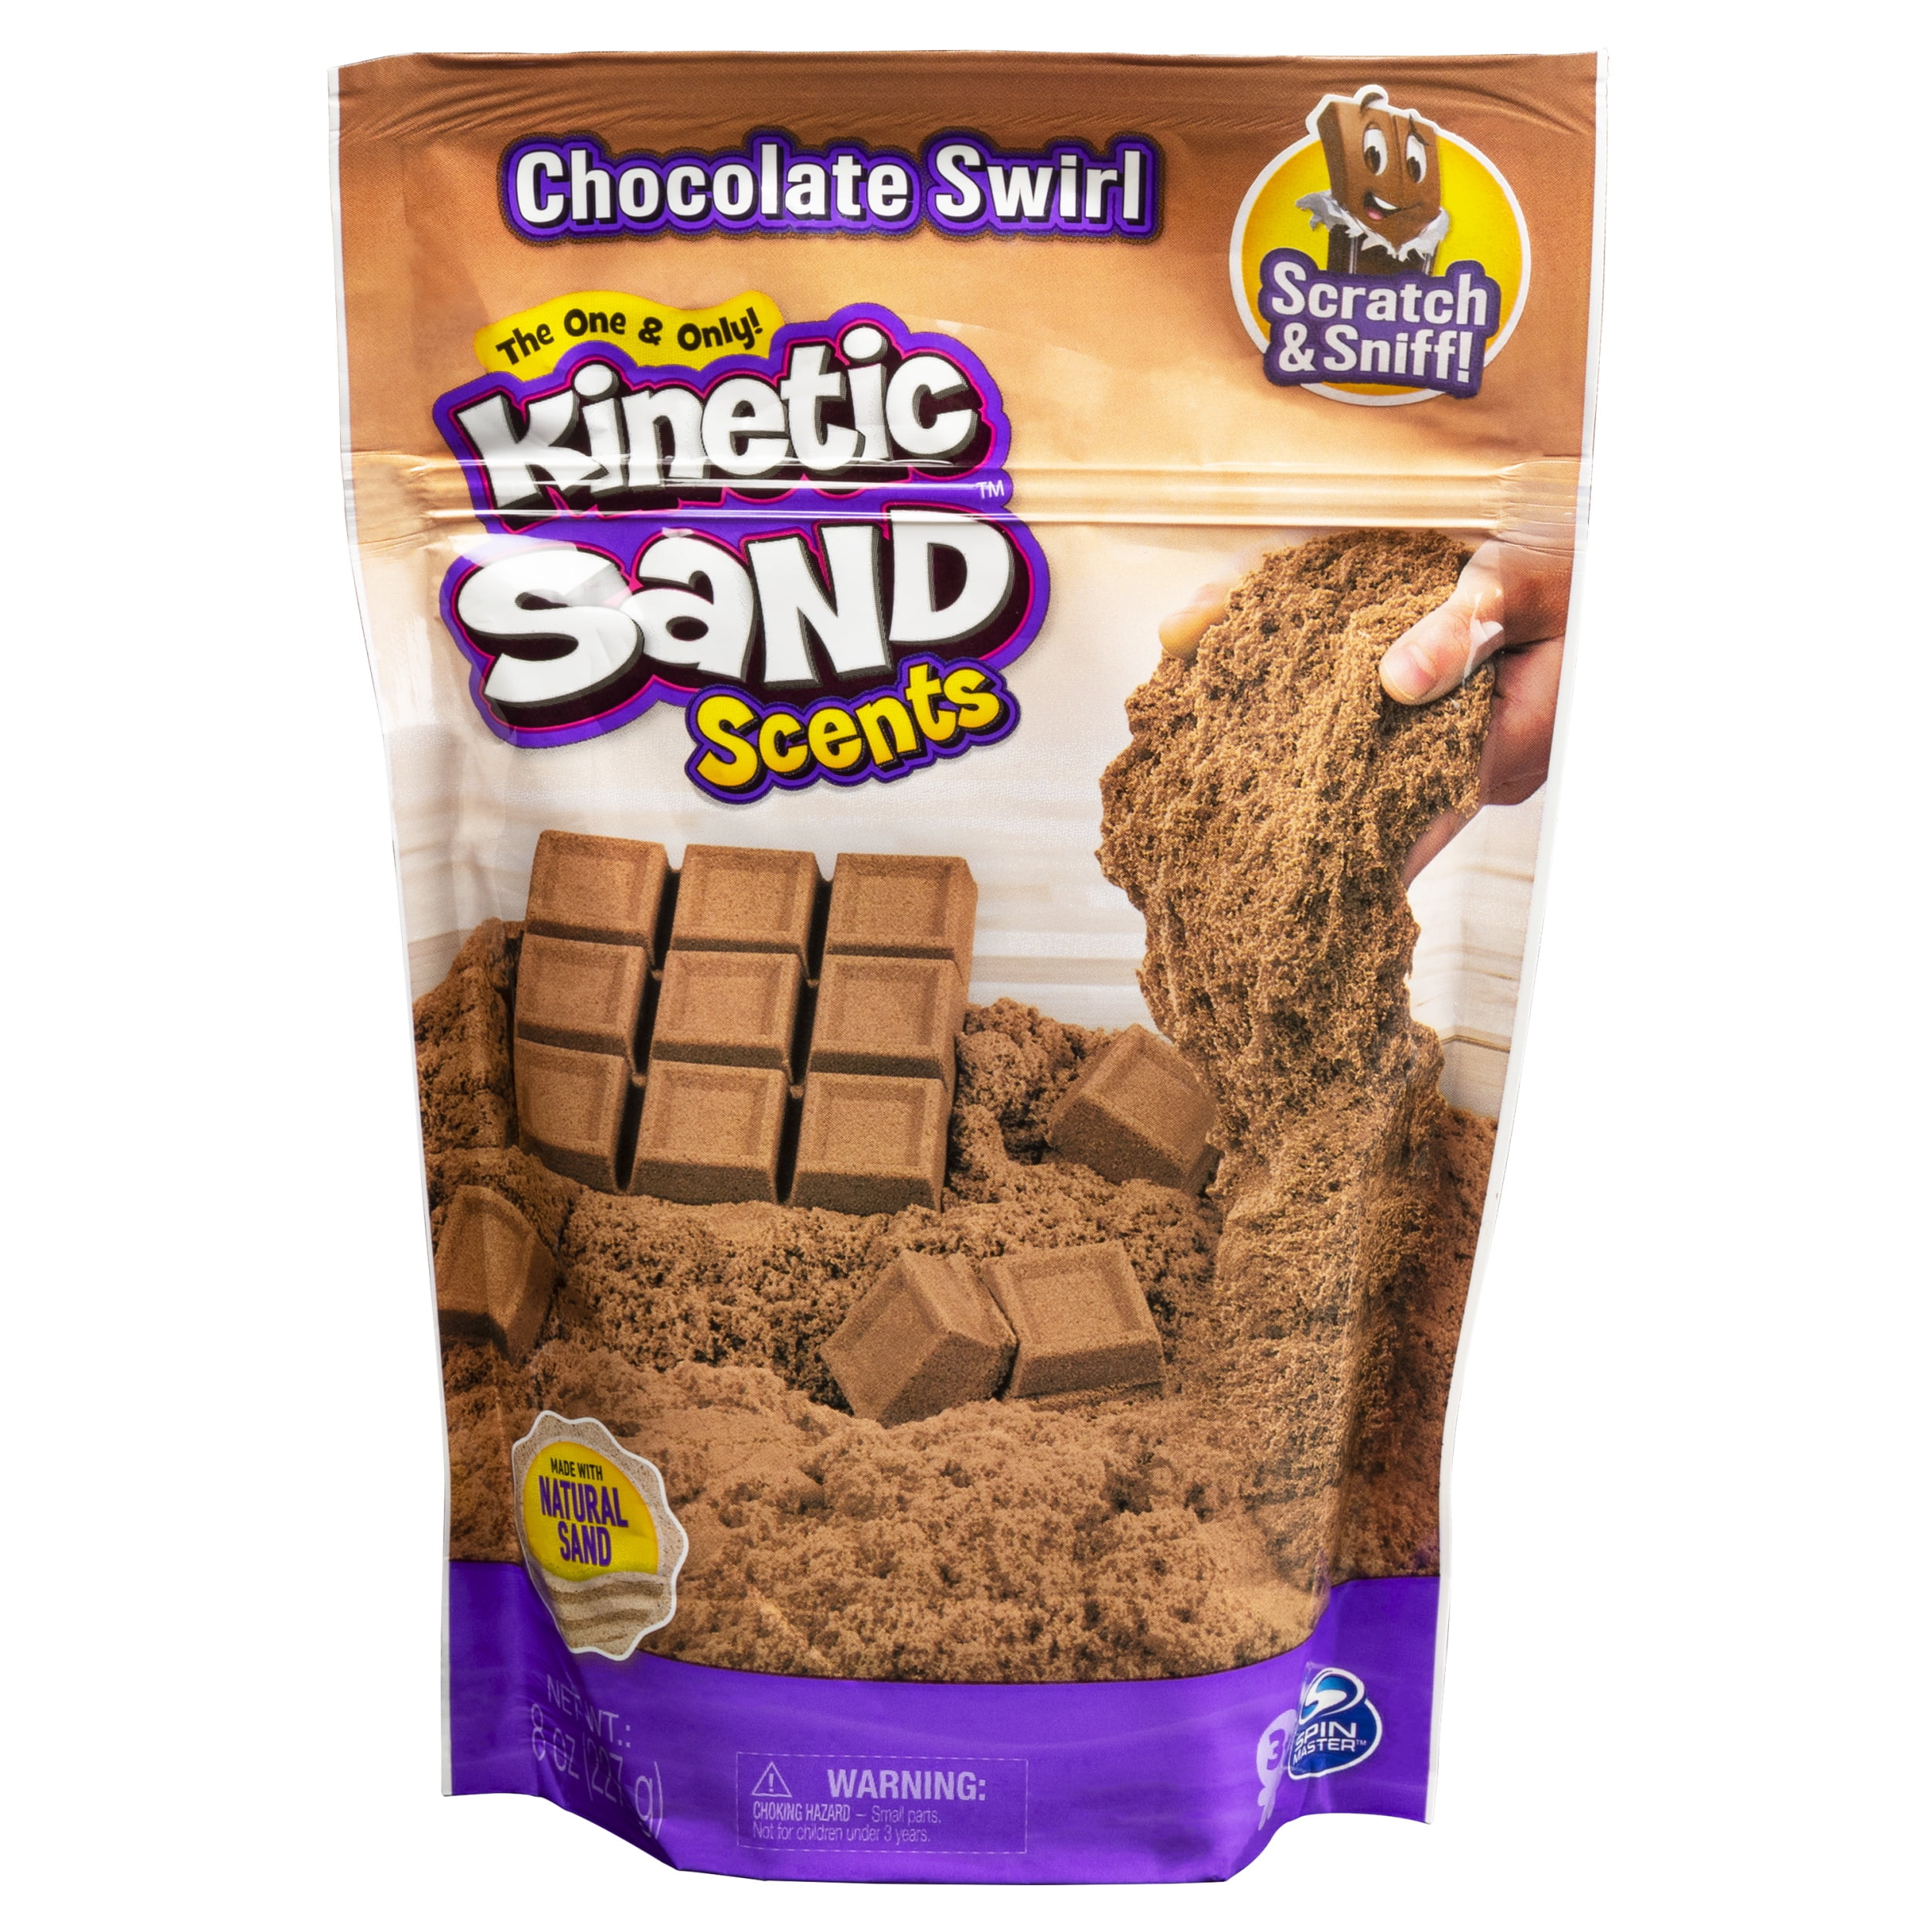 SpinMaster Kinetic Sand Scents Vanilla Cupcake 8 oz